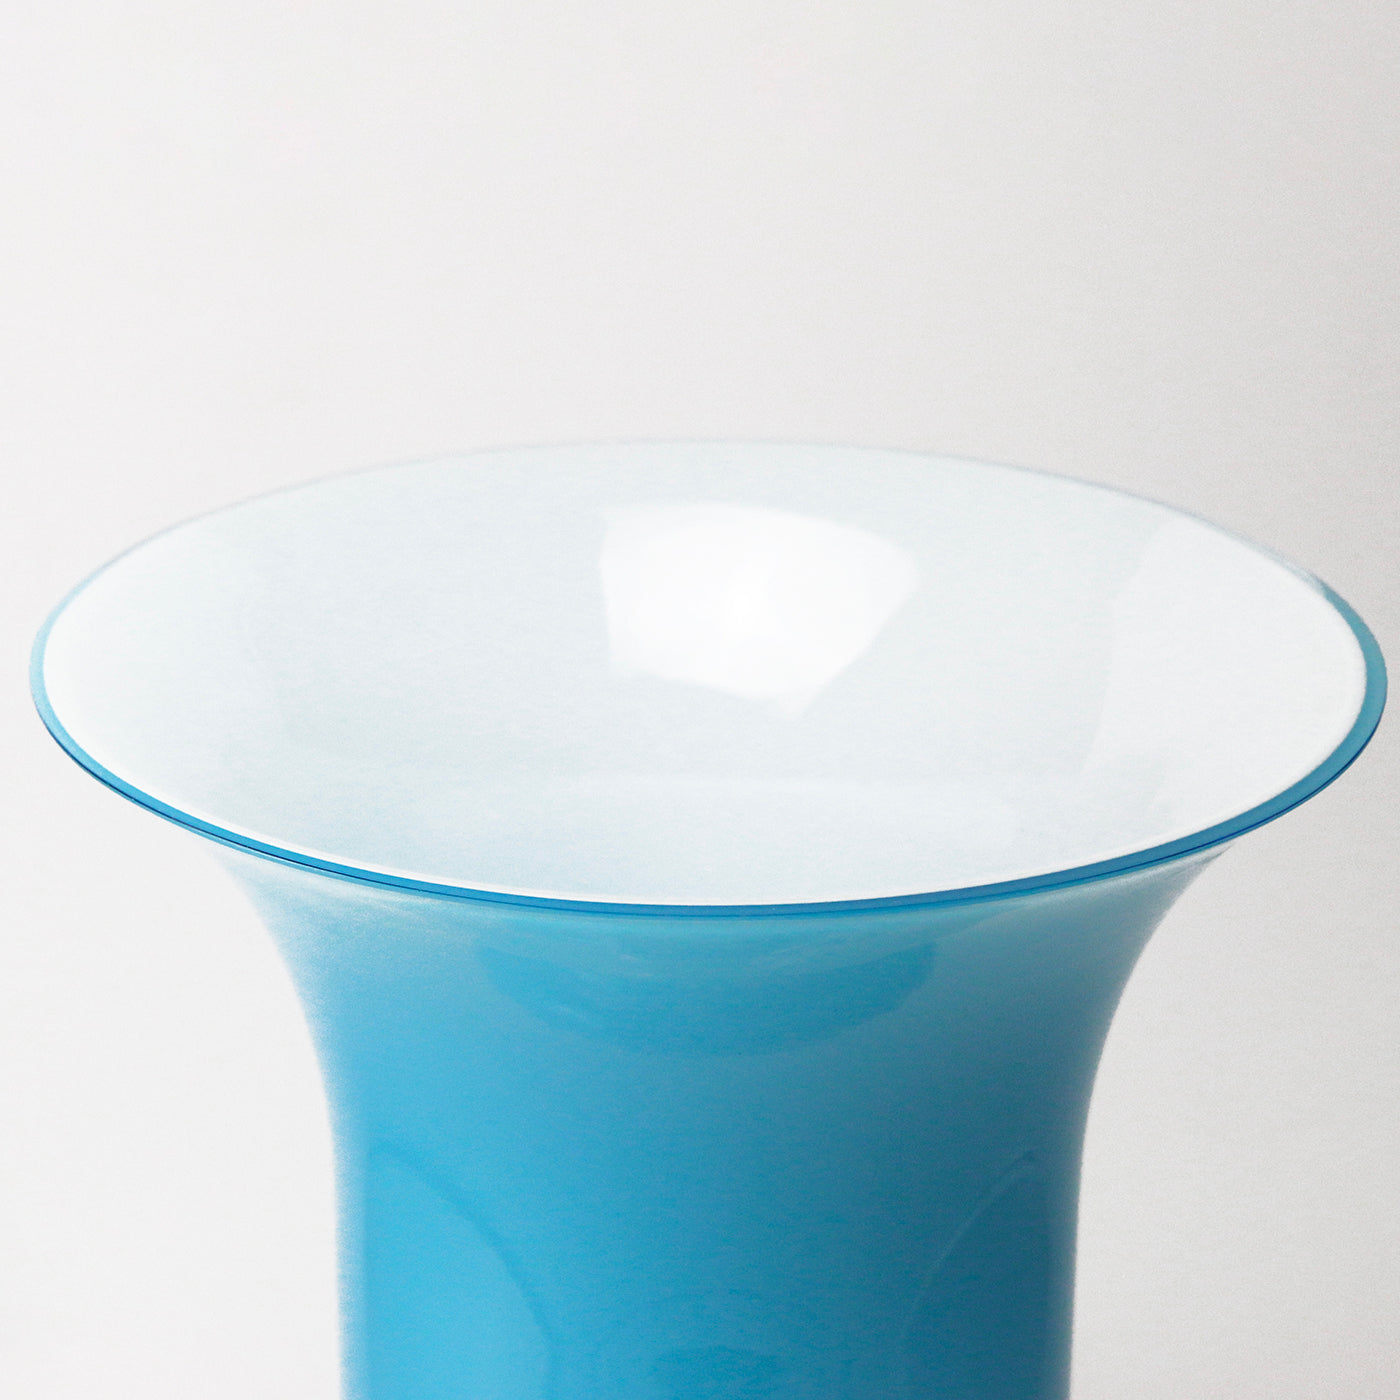 Incamiciato Turquoise Vase - Alternative view 1